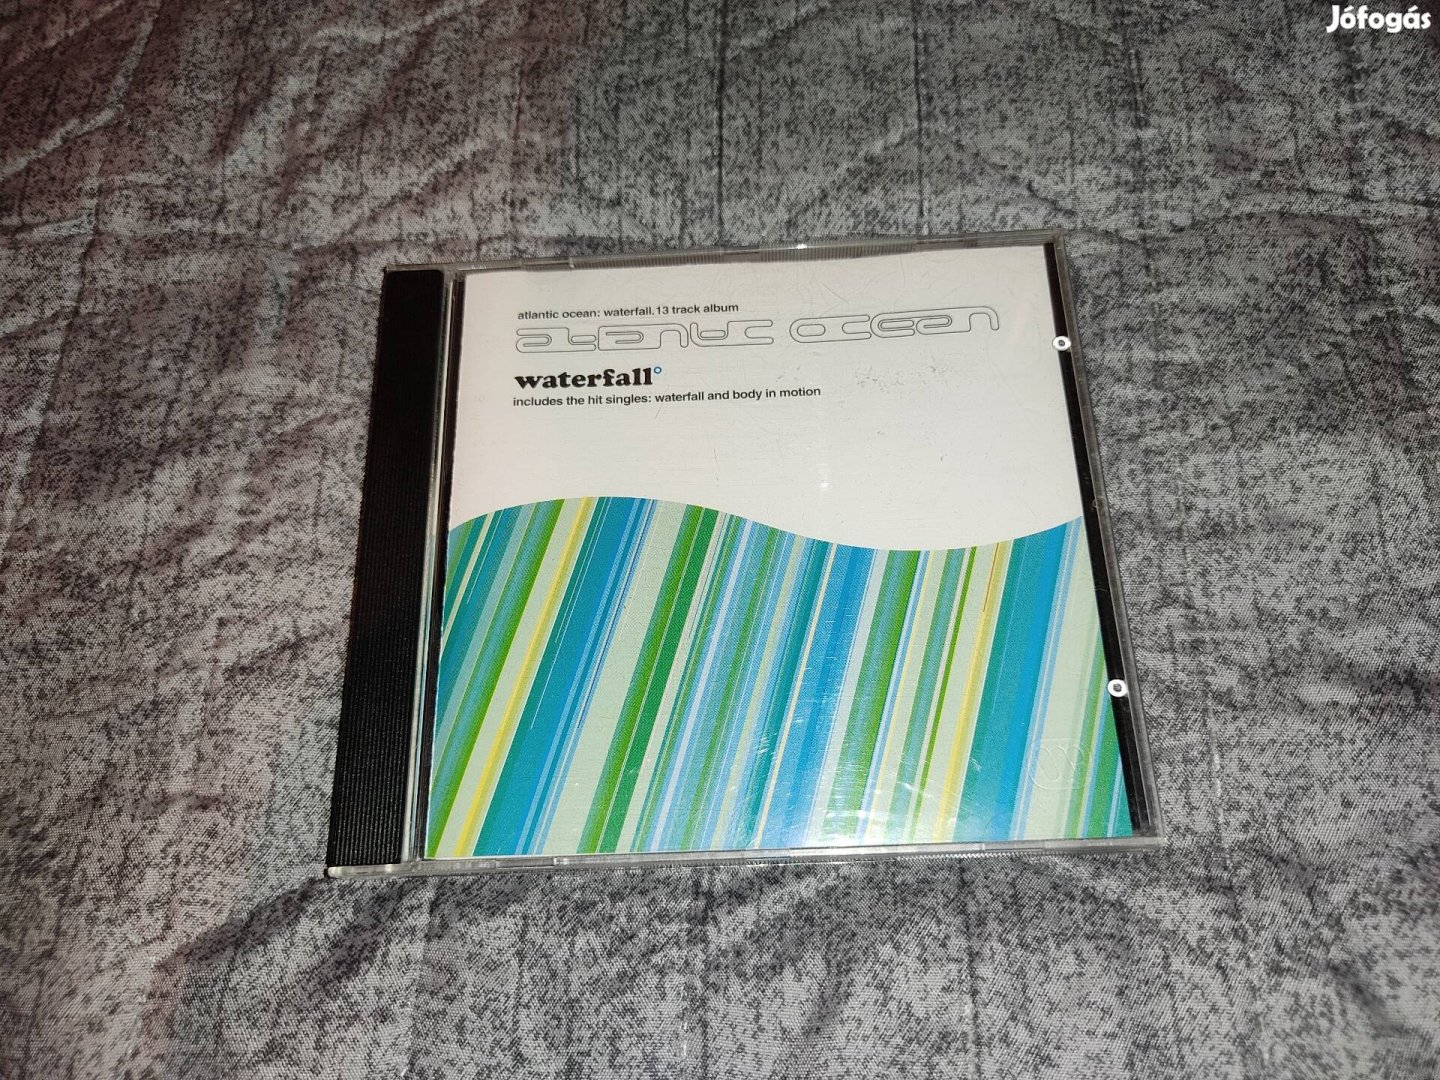 Atlantic Ocean - Waterfall  CD (1993)